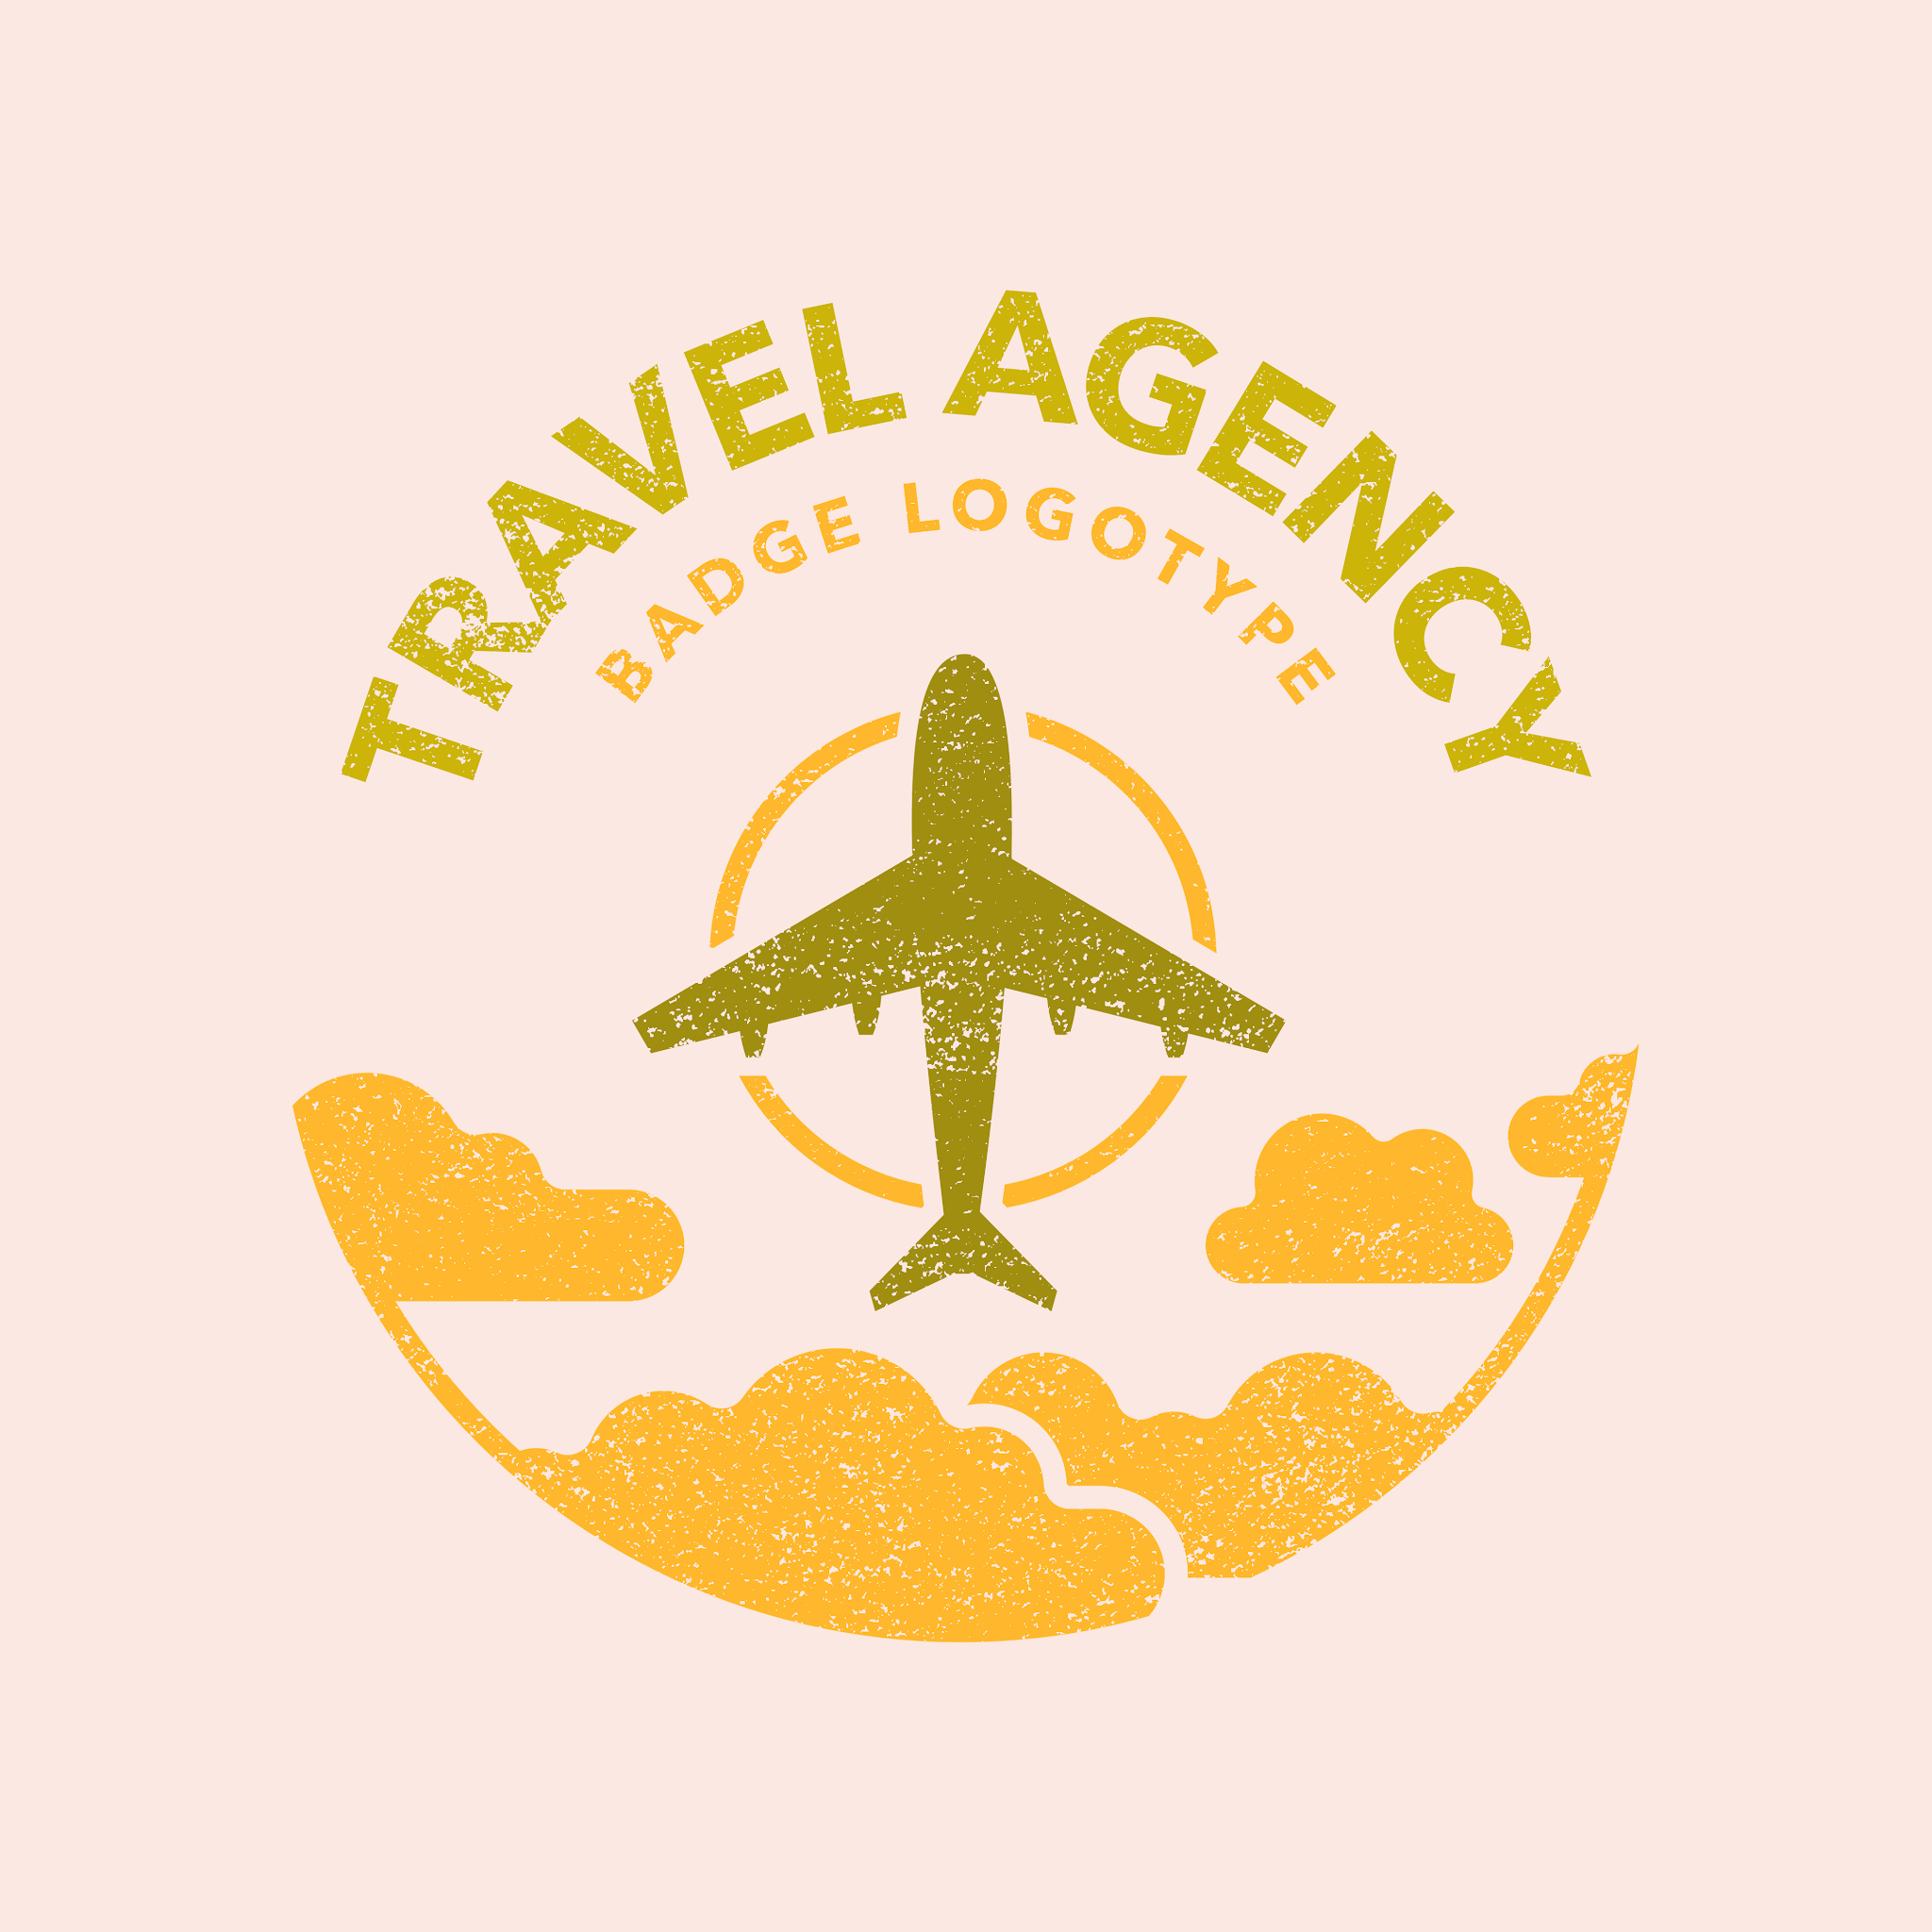 Travel agency logo maker online - kitchenlopers